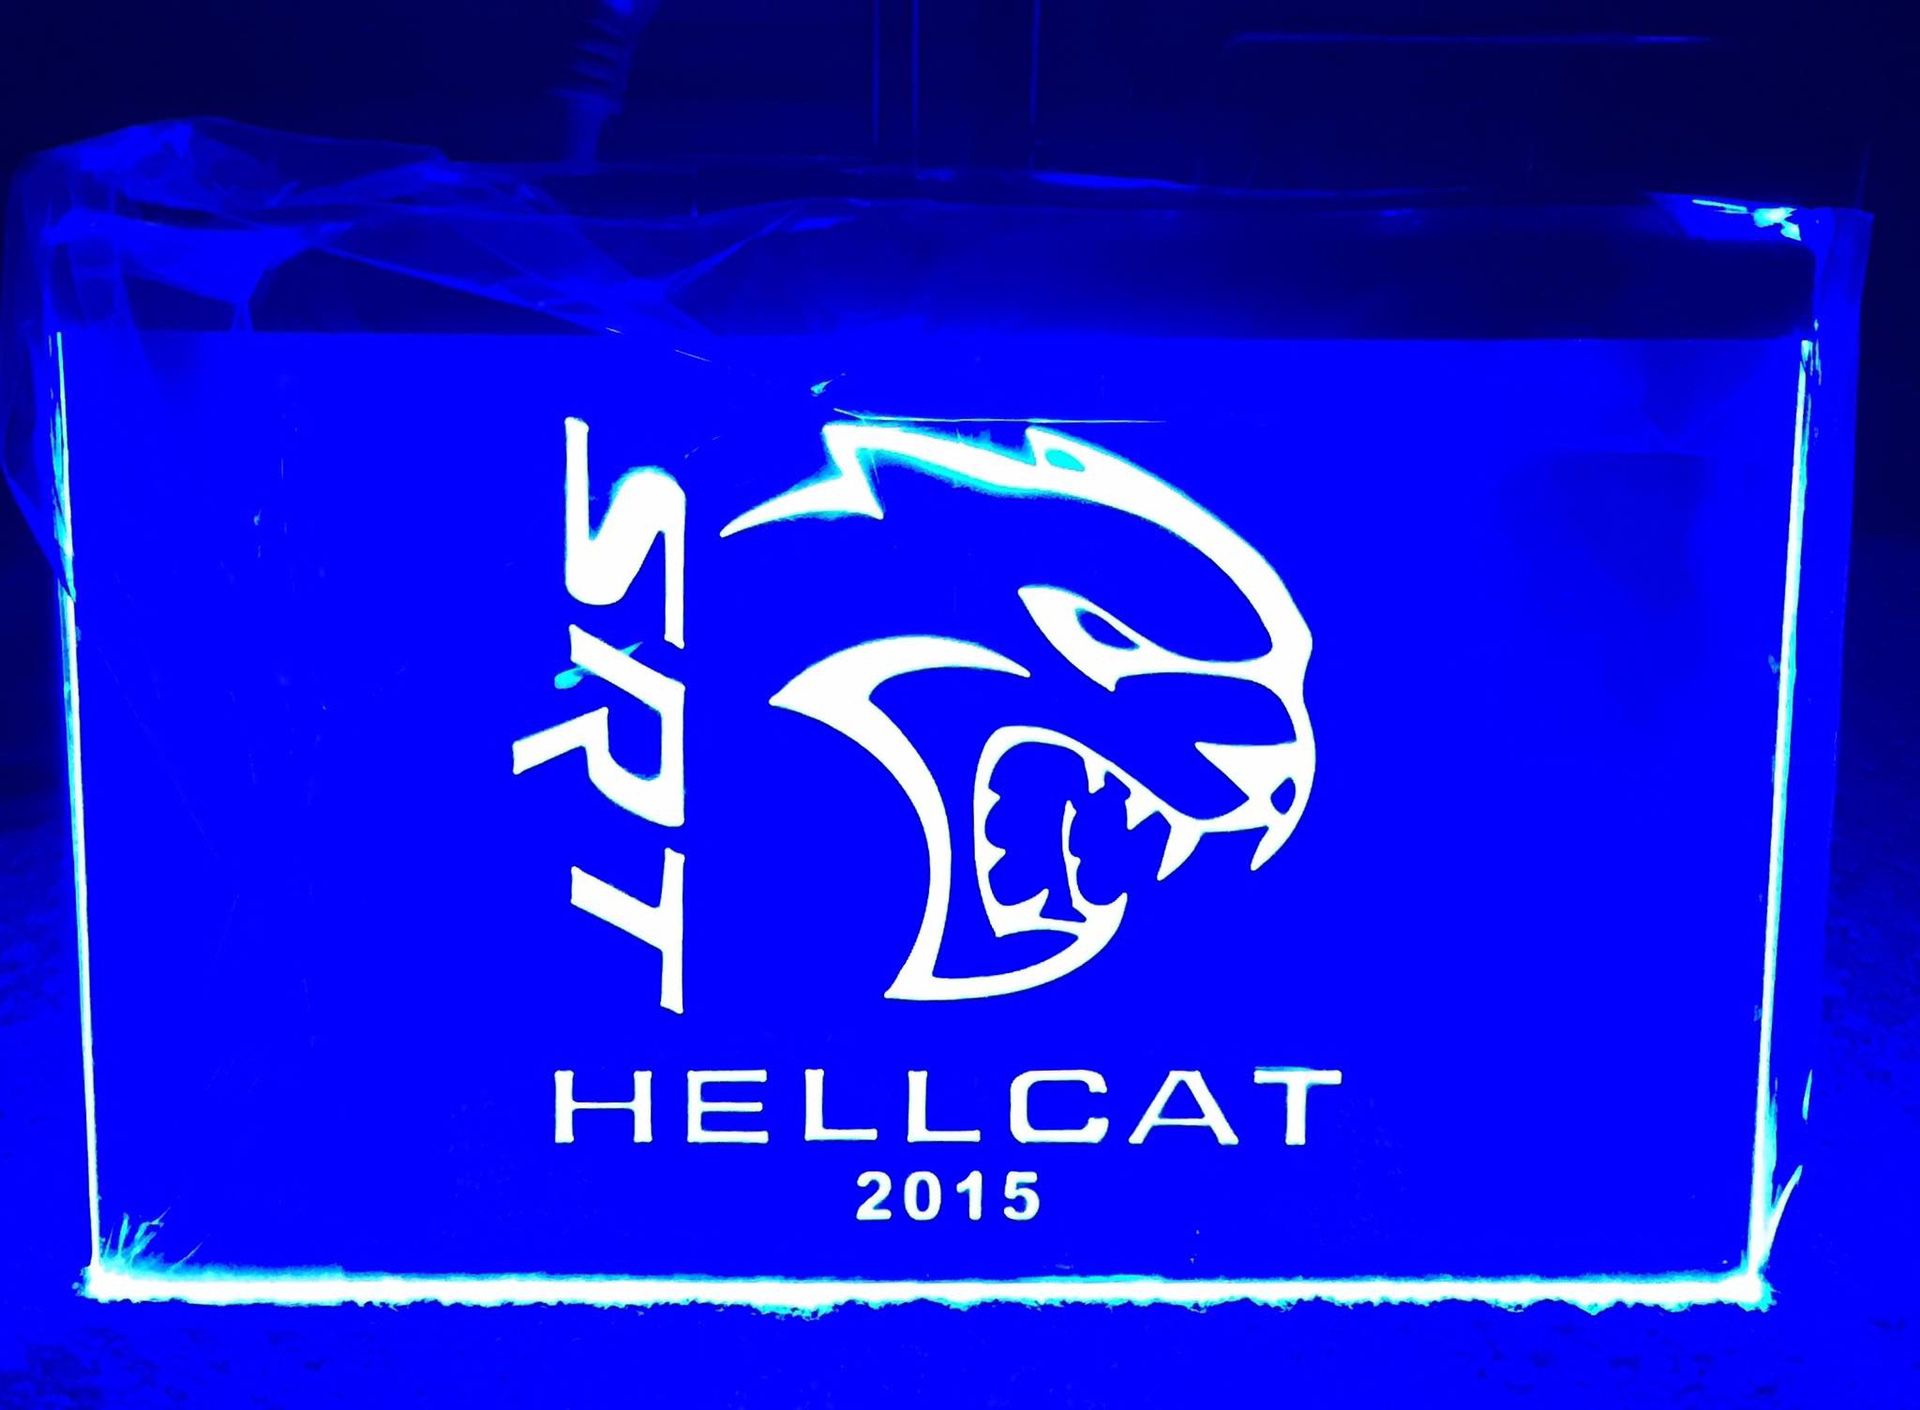 SRT Hellcat 3D LED Neon Light Sign Wall Decor